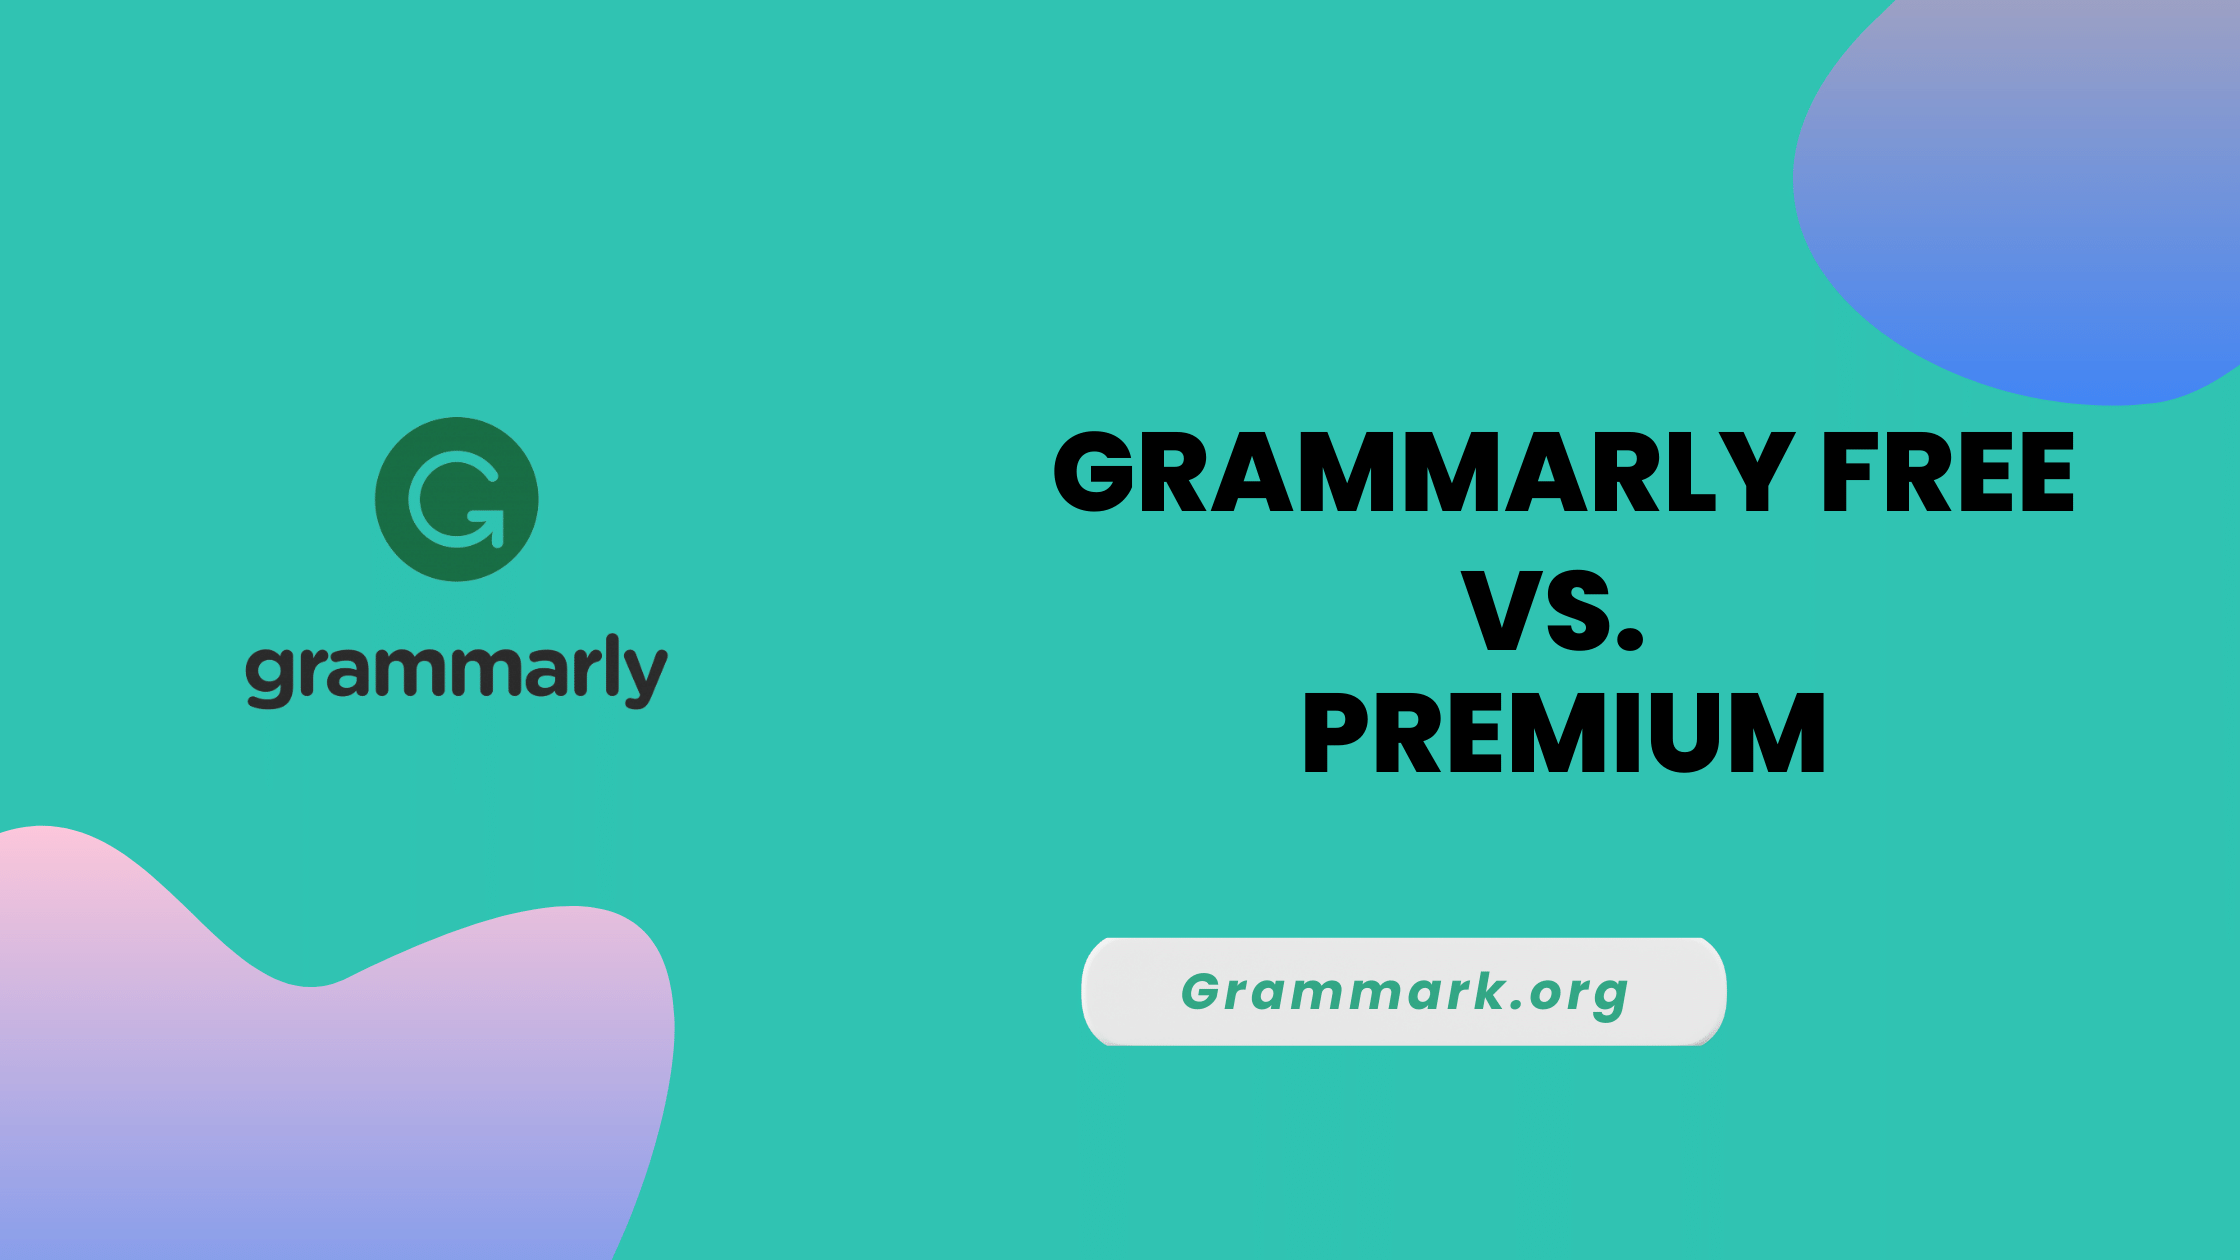 grammarly free vs premium 2019